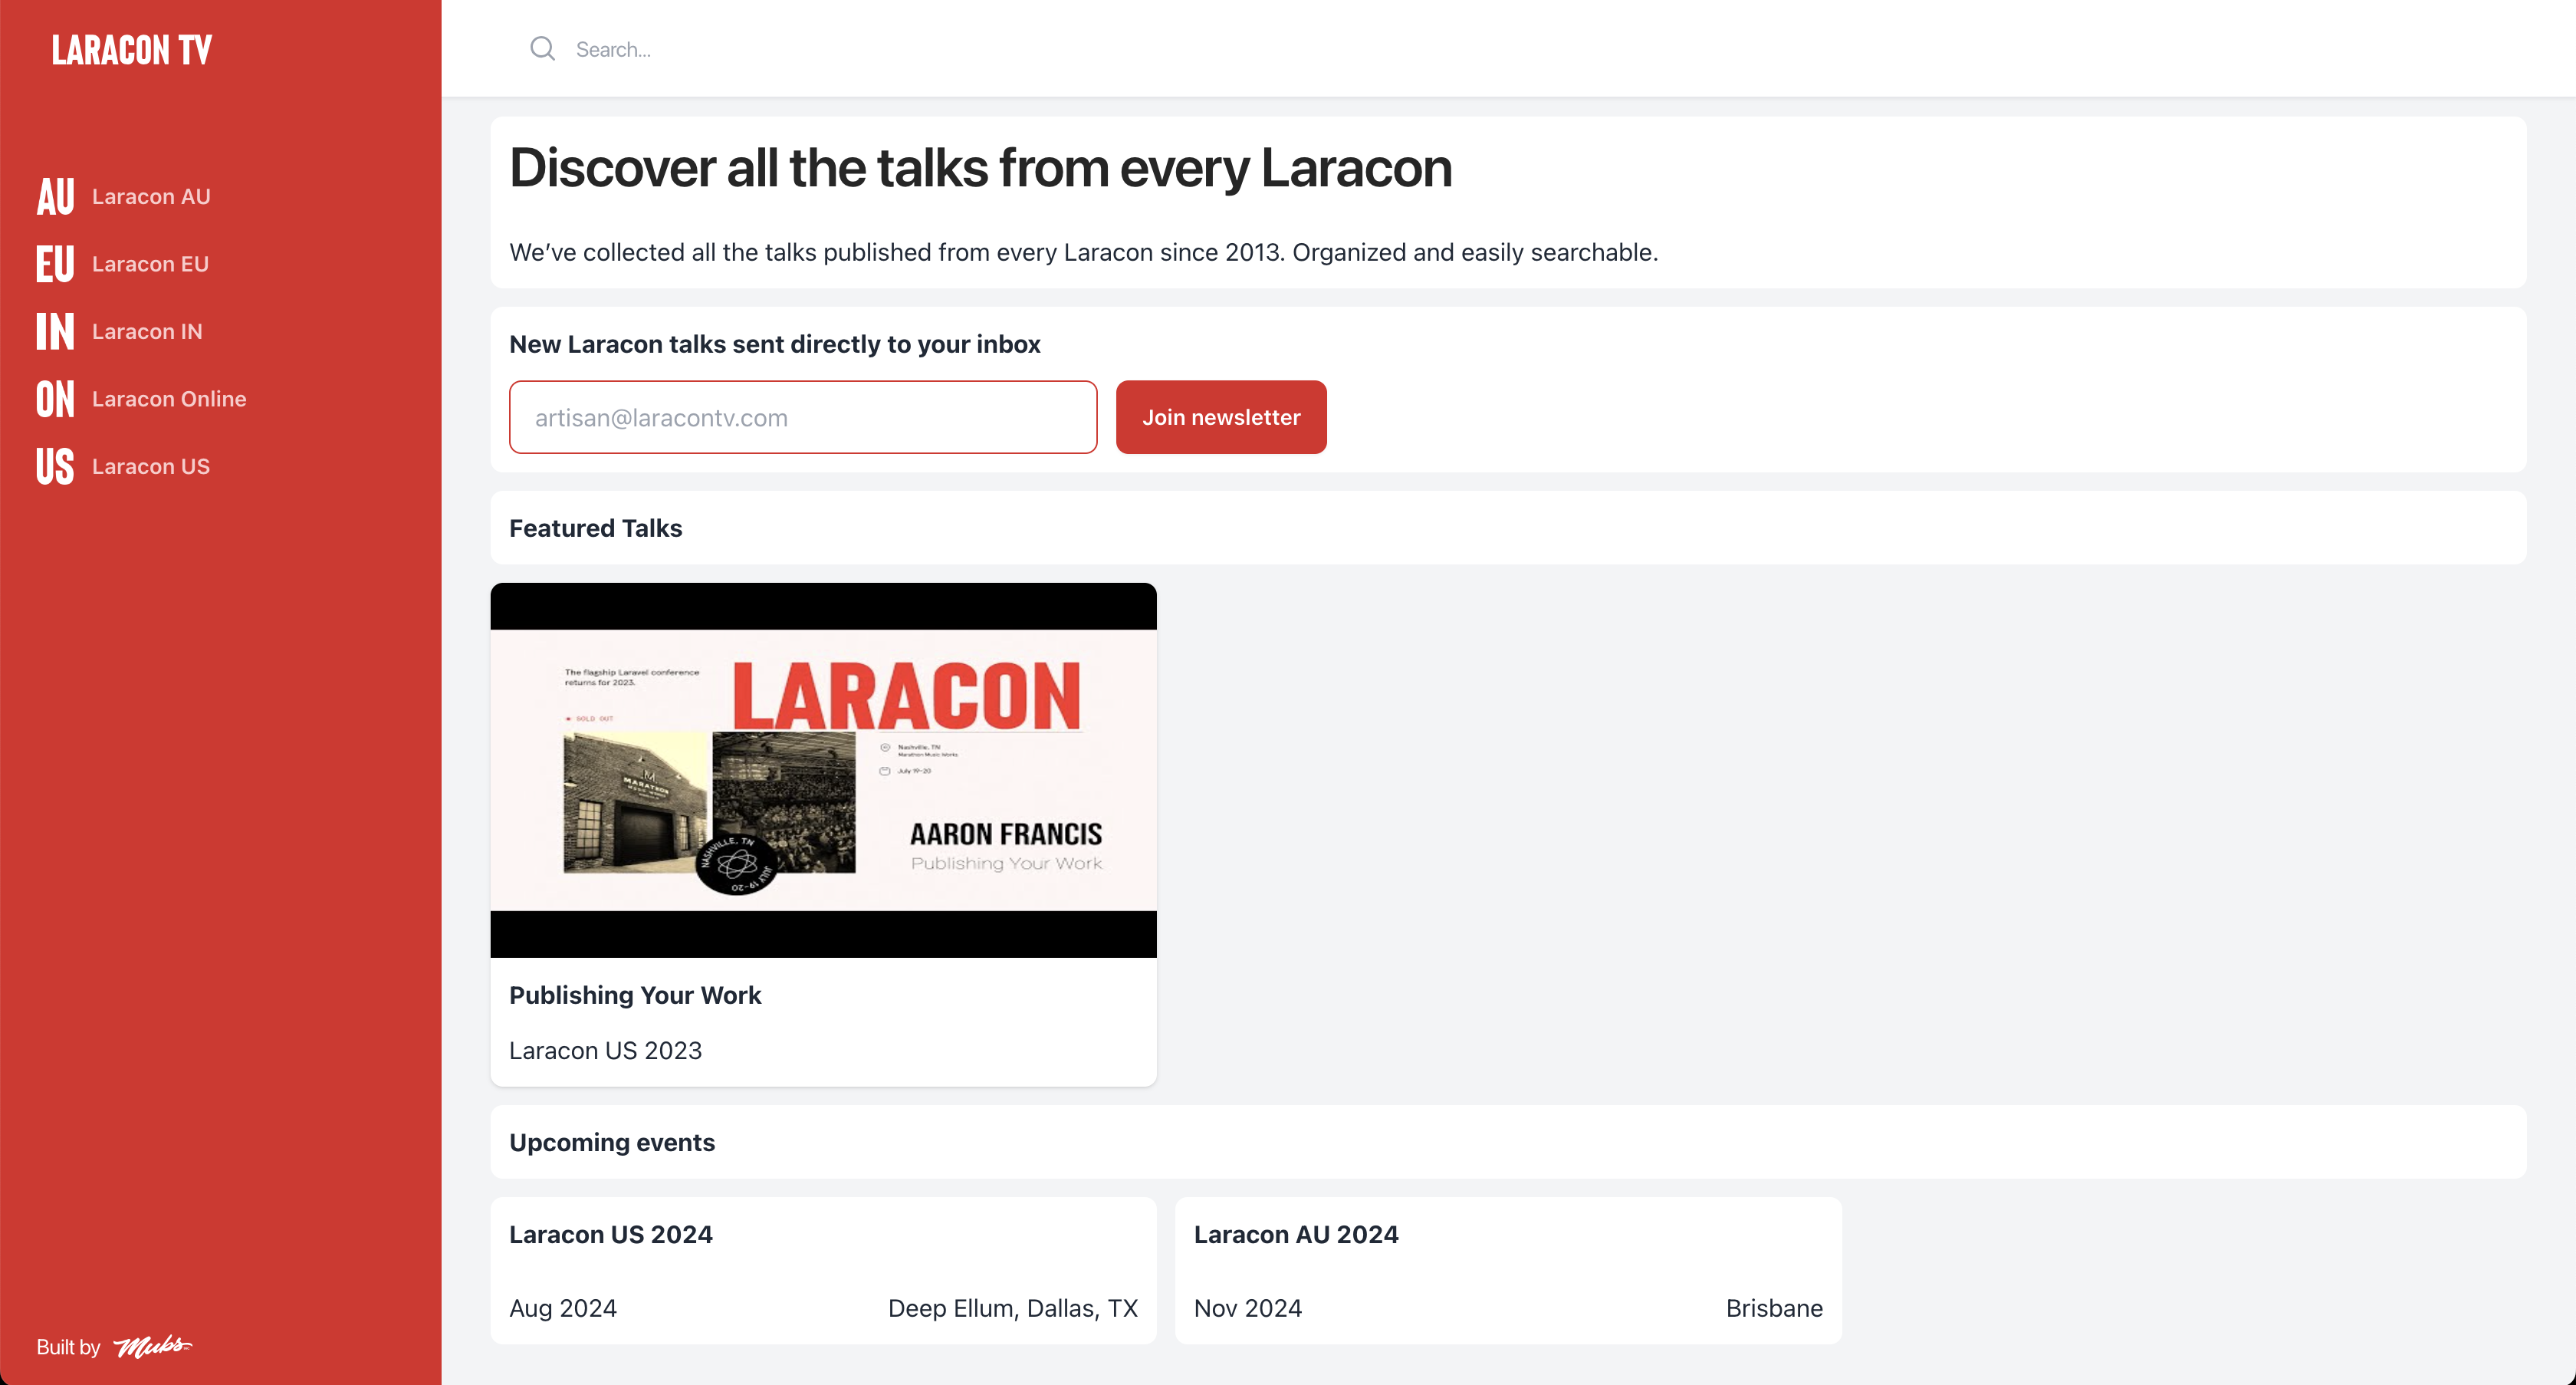 Laracon TV: Discover all the talks from every Laracon